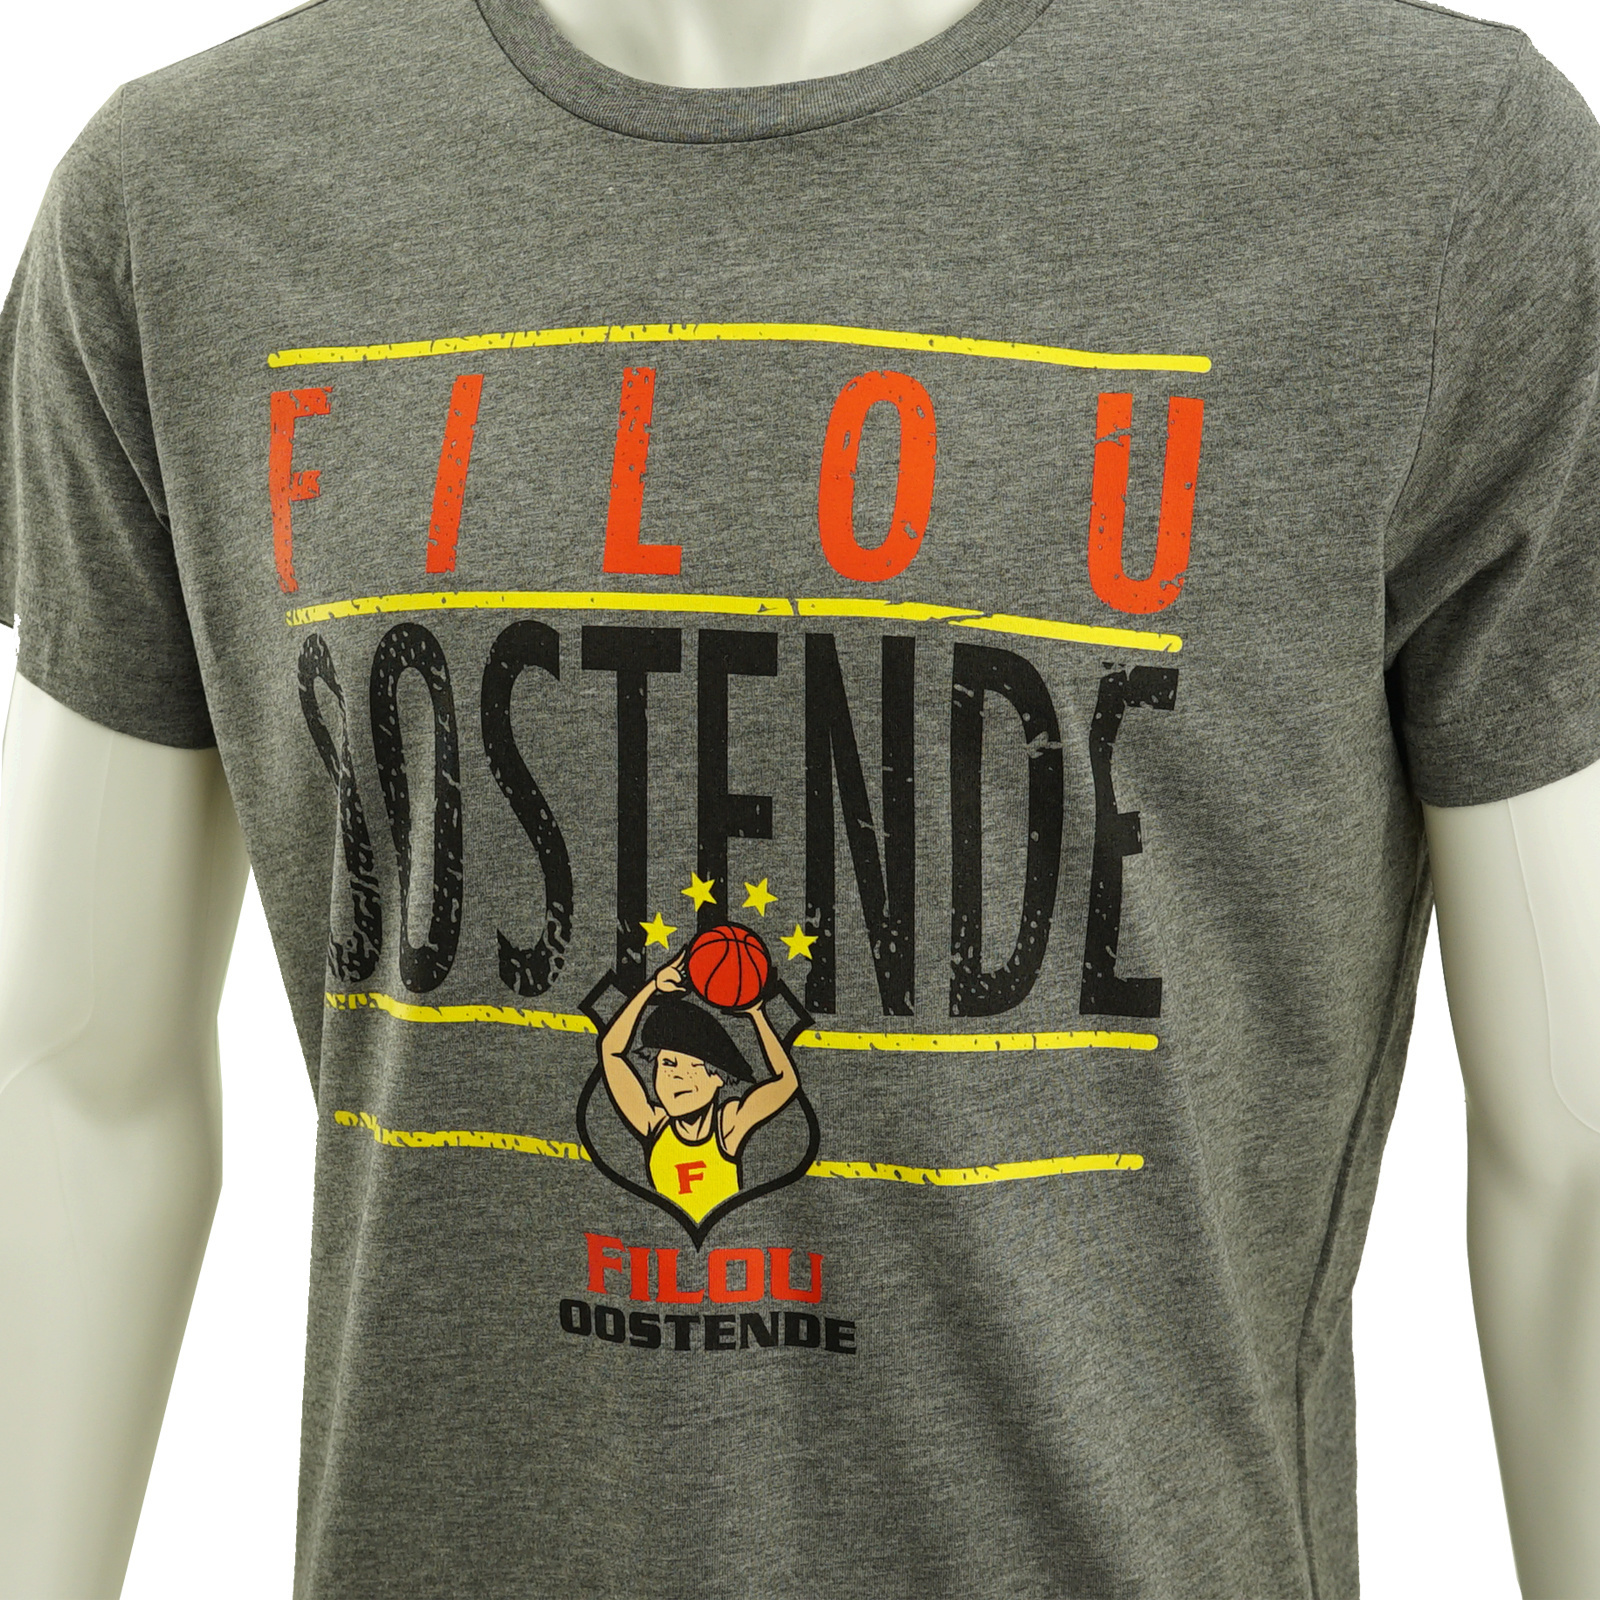 Topfanz T-shirt grey Filou Oostende